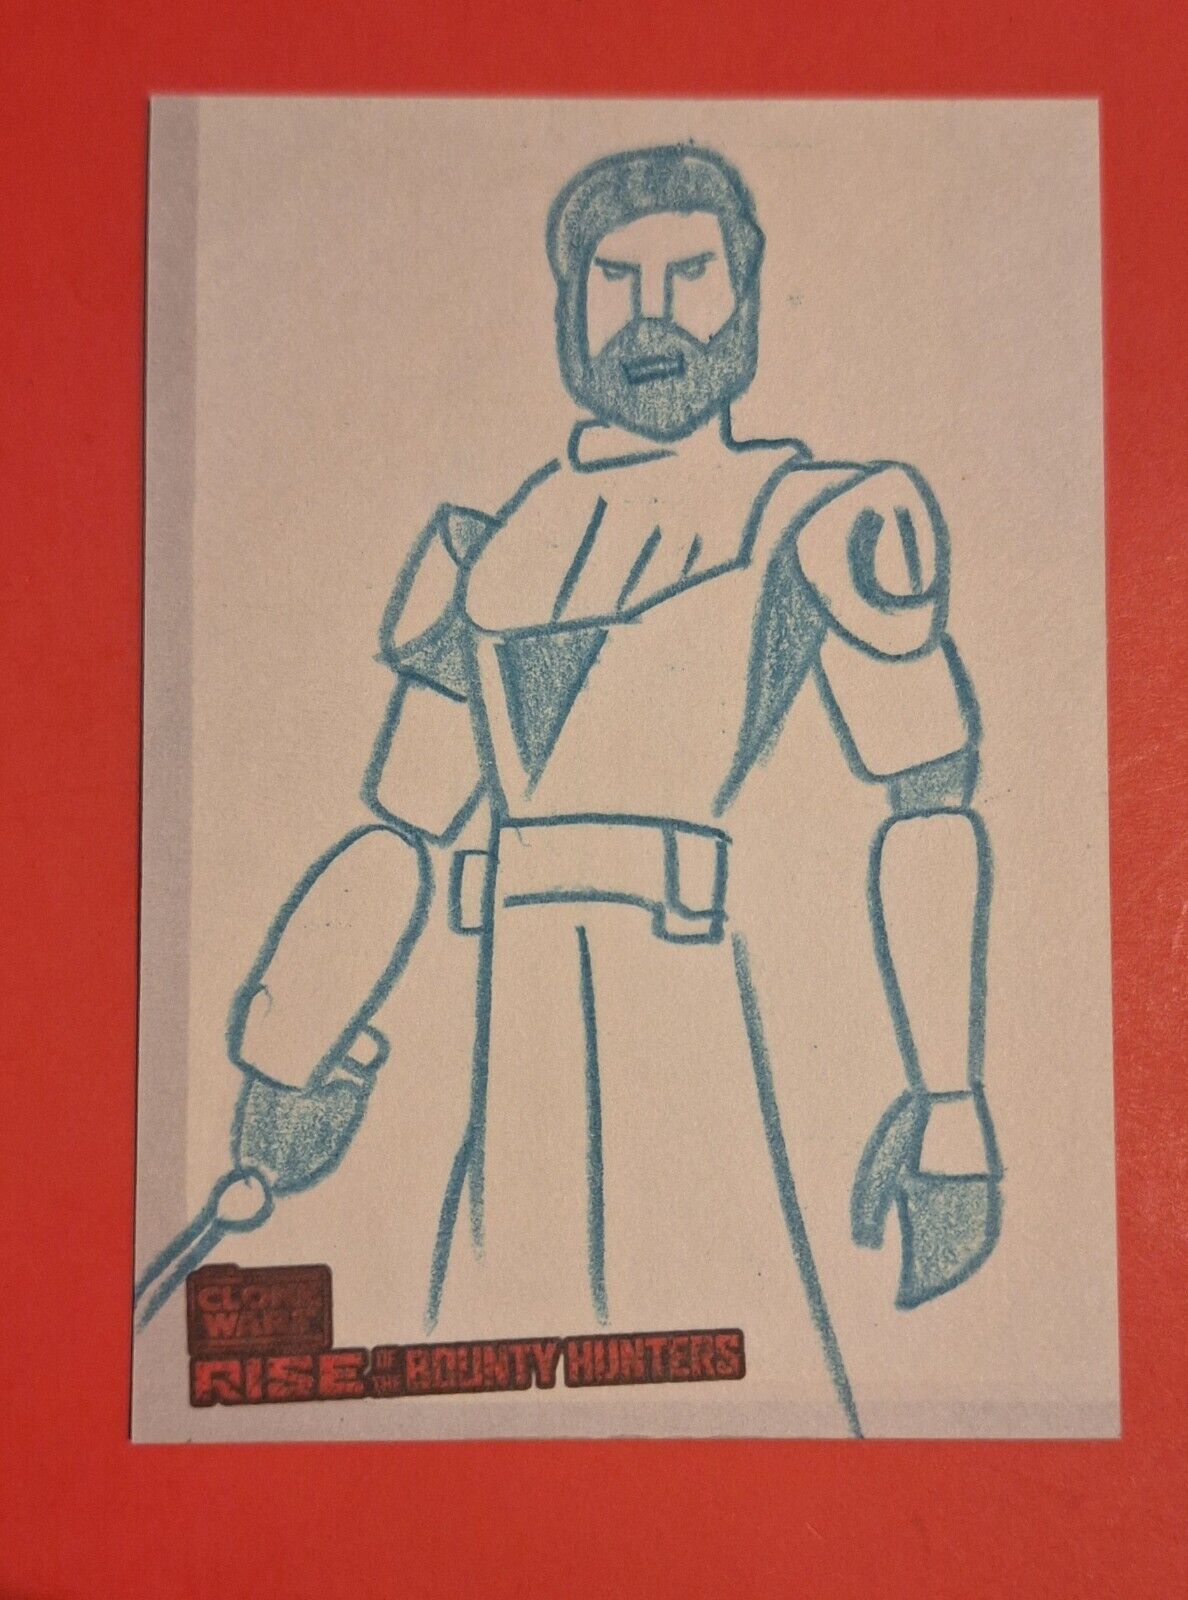 2010 Topps Star Wars Sketch Card ROTBH - Kenobi by Jason Hughes